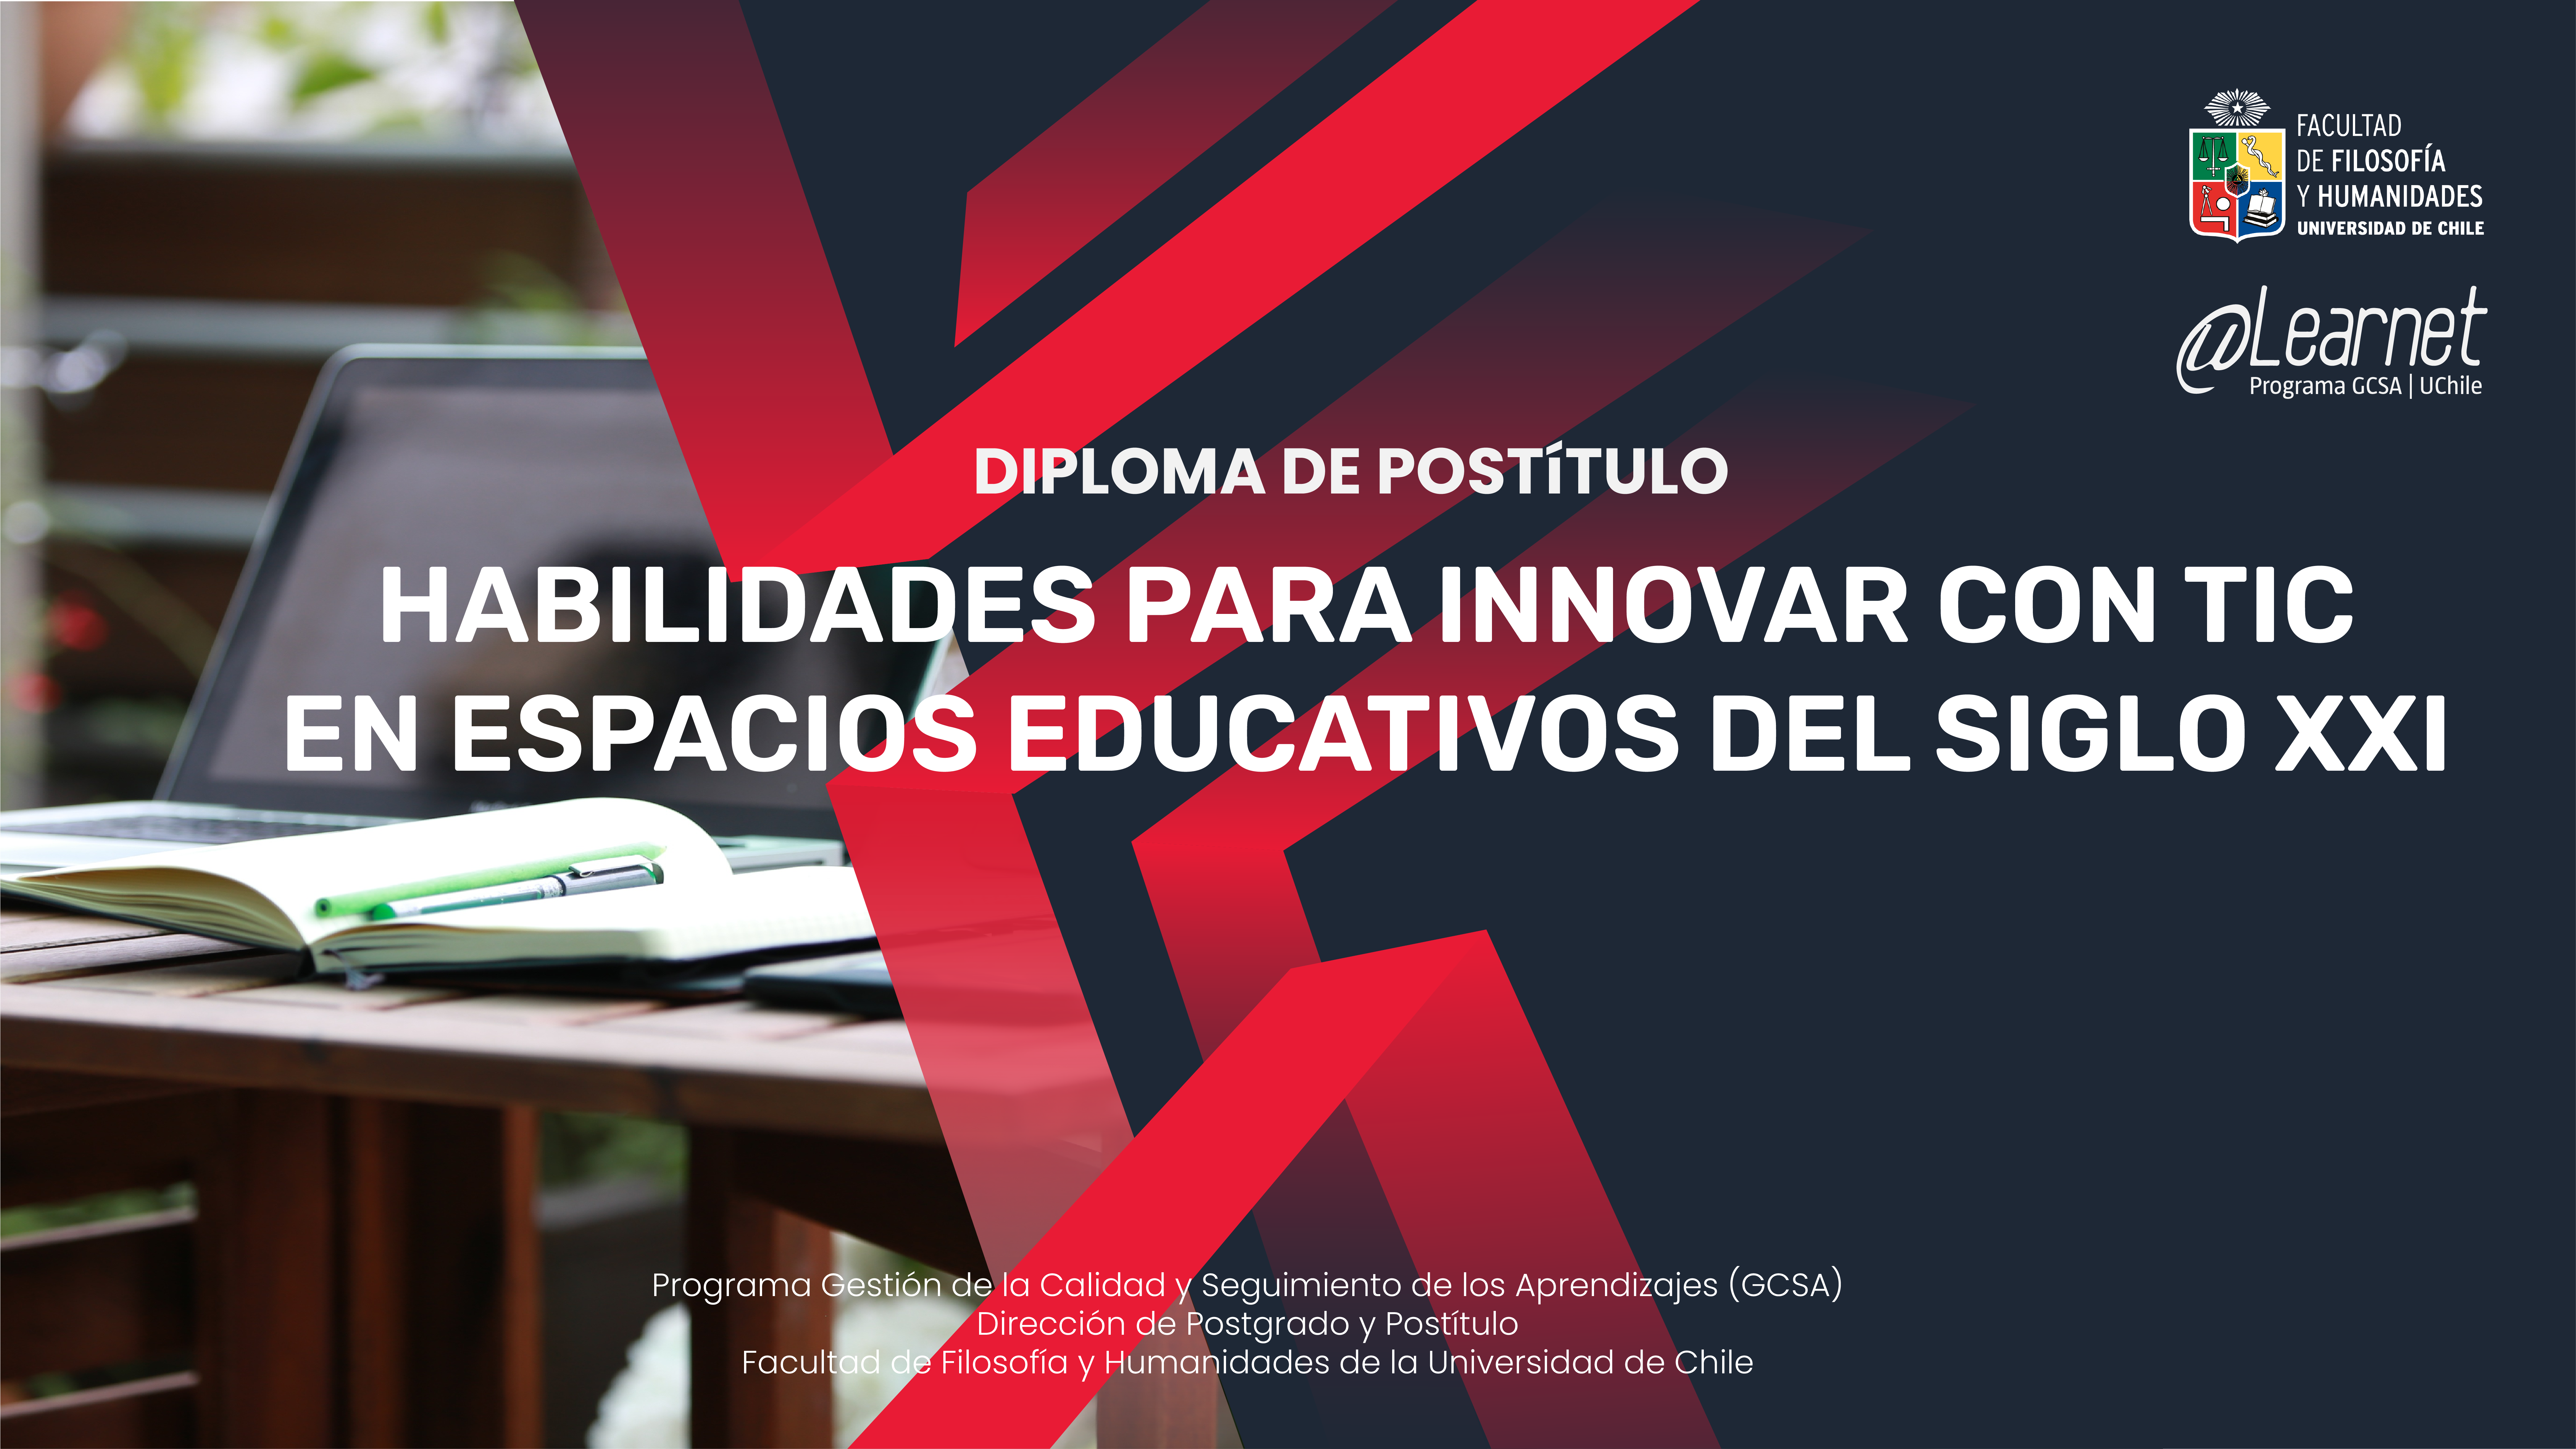 Diploma Habilidades para Innovar con TIC en Espacios Educativos del S.XXI 